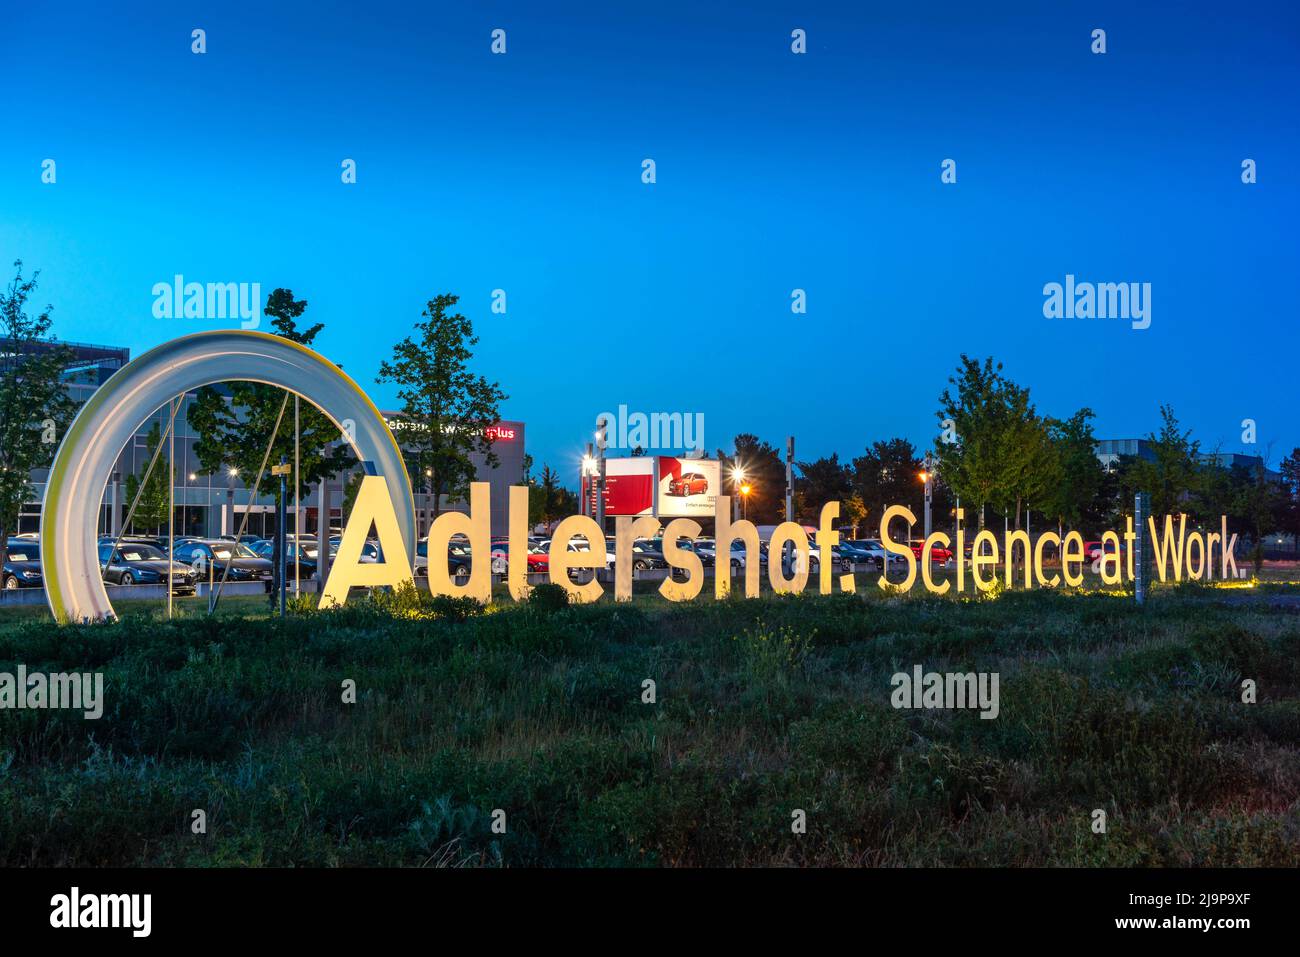 Adlershof Science Park sign illuminated at night, Ernst Ruska Ufer, Adlershof, Berlin, Germany, Europe Stock Photo